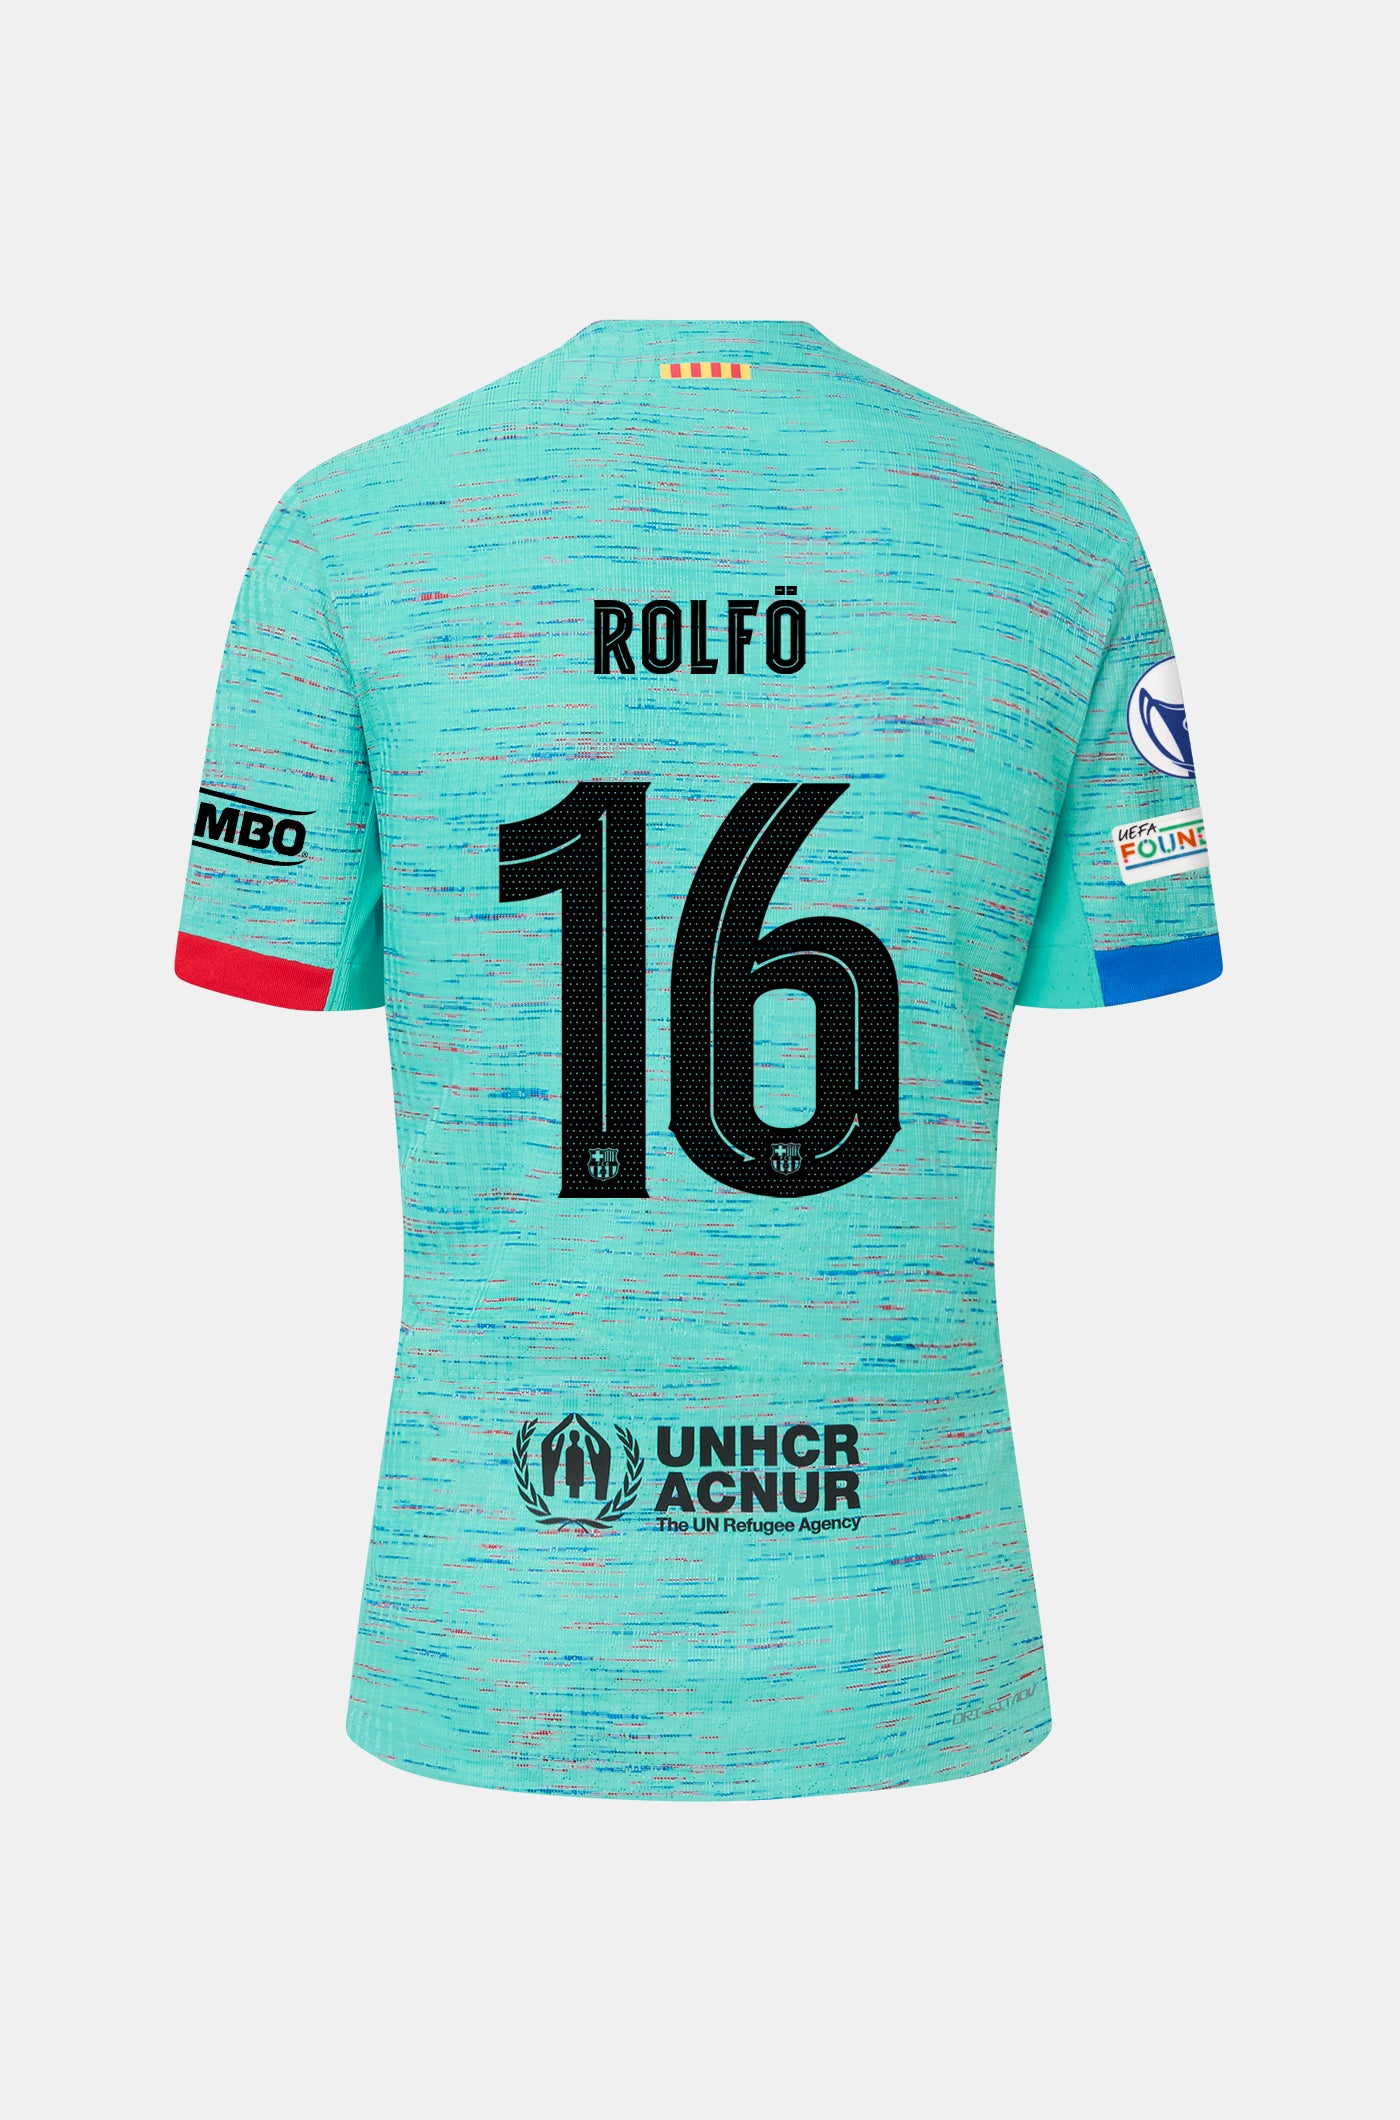 UWCL FC Barcelona third shirt 23/24 Player's Edition - ROLFÖ